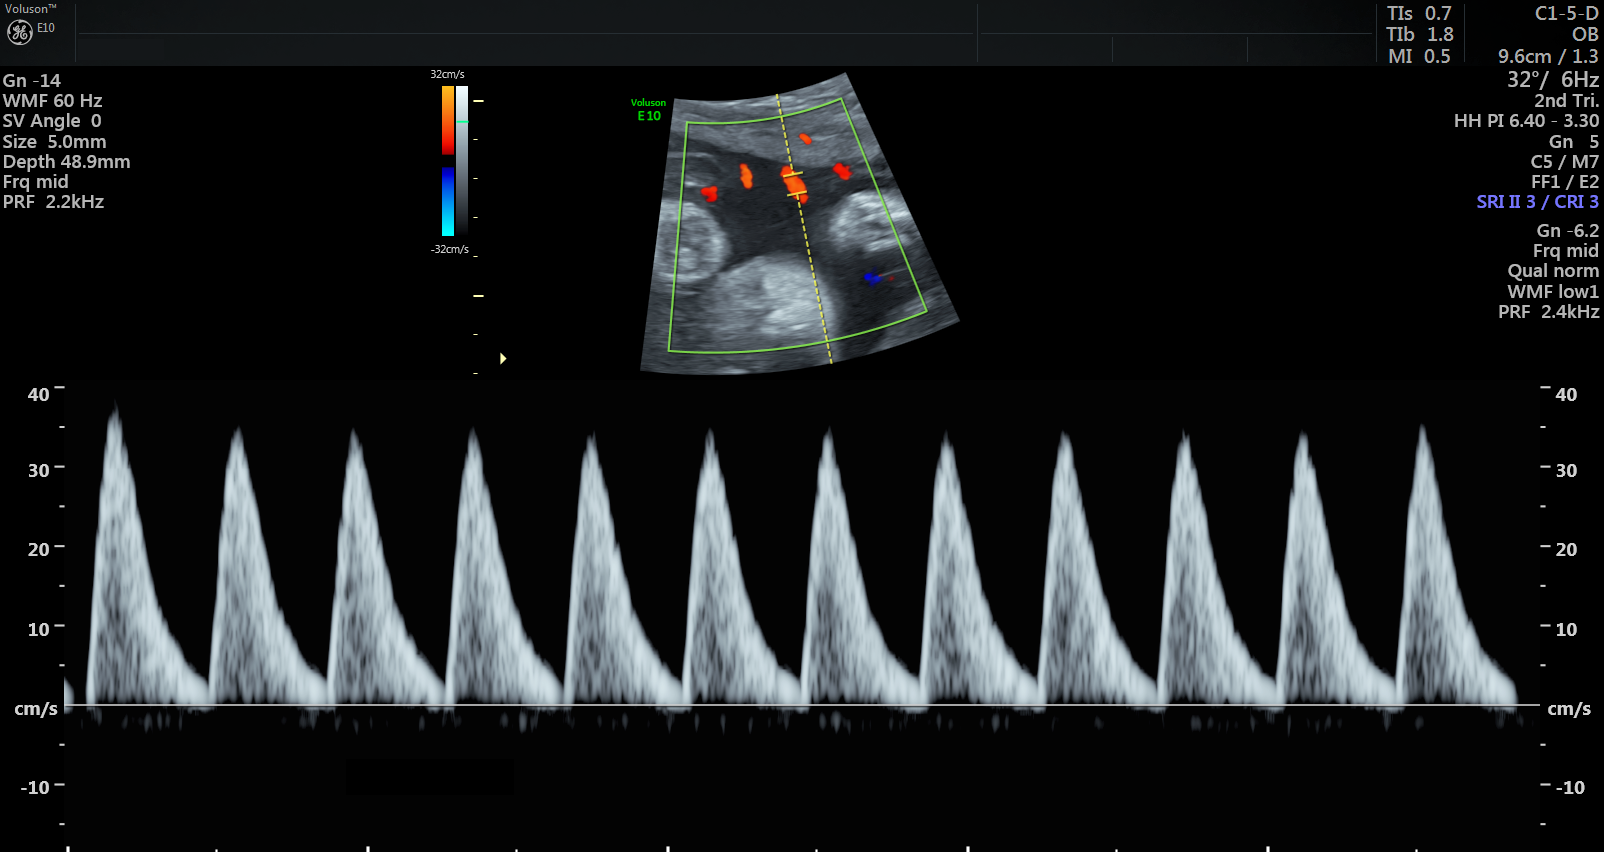 : Ultrasound scan showing abnormal blood pulse pattern, indicating MVM